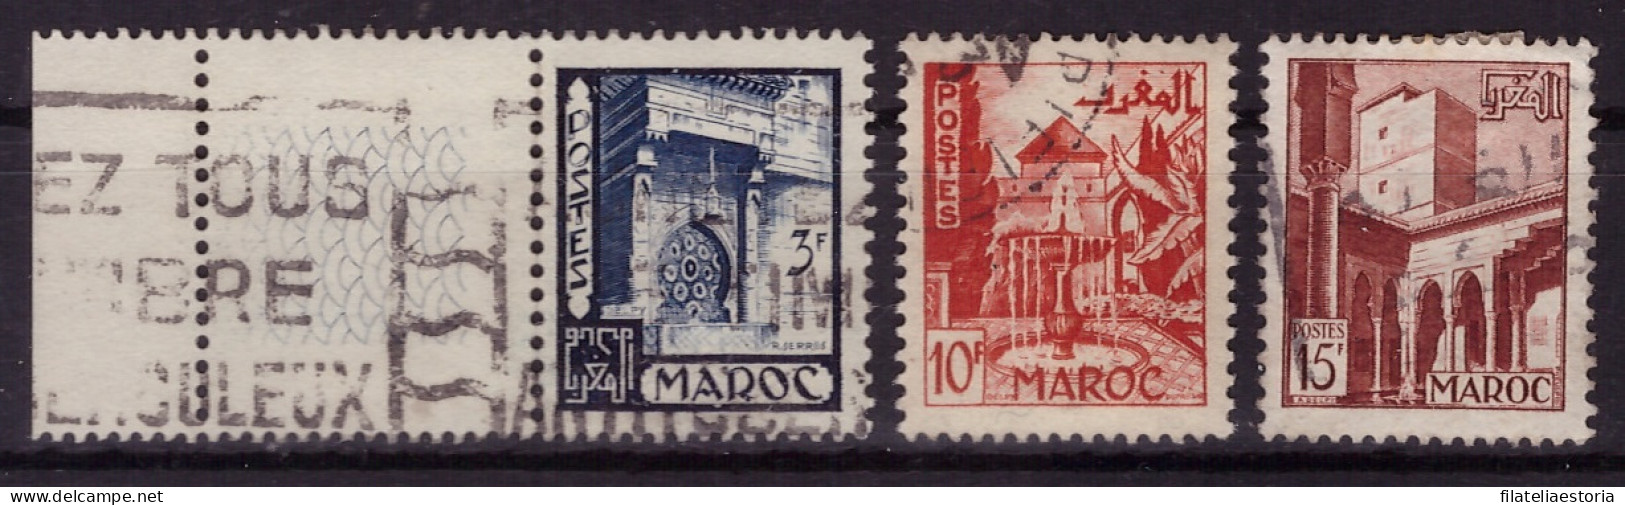 Maroc 1949/1951 - Oblitéré - Bâtiments - Monuments - Michel Nr. 300 303 305 (mar282) - Gebraucht